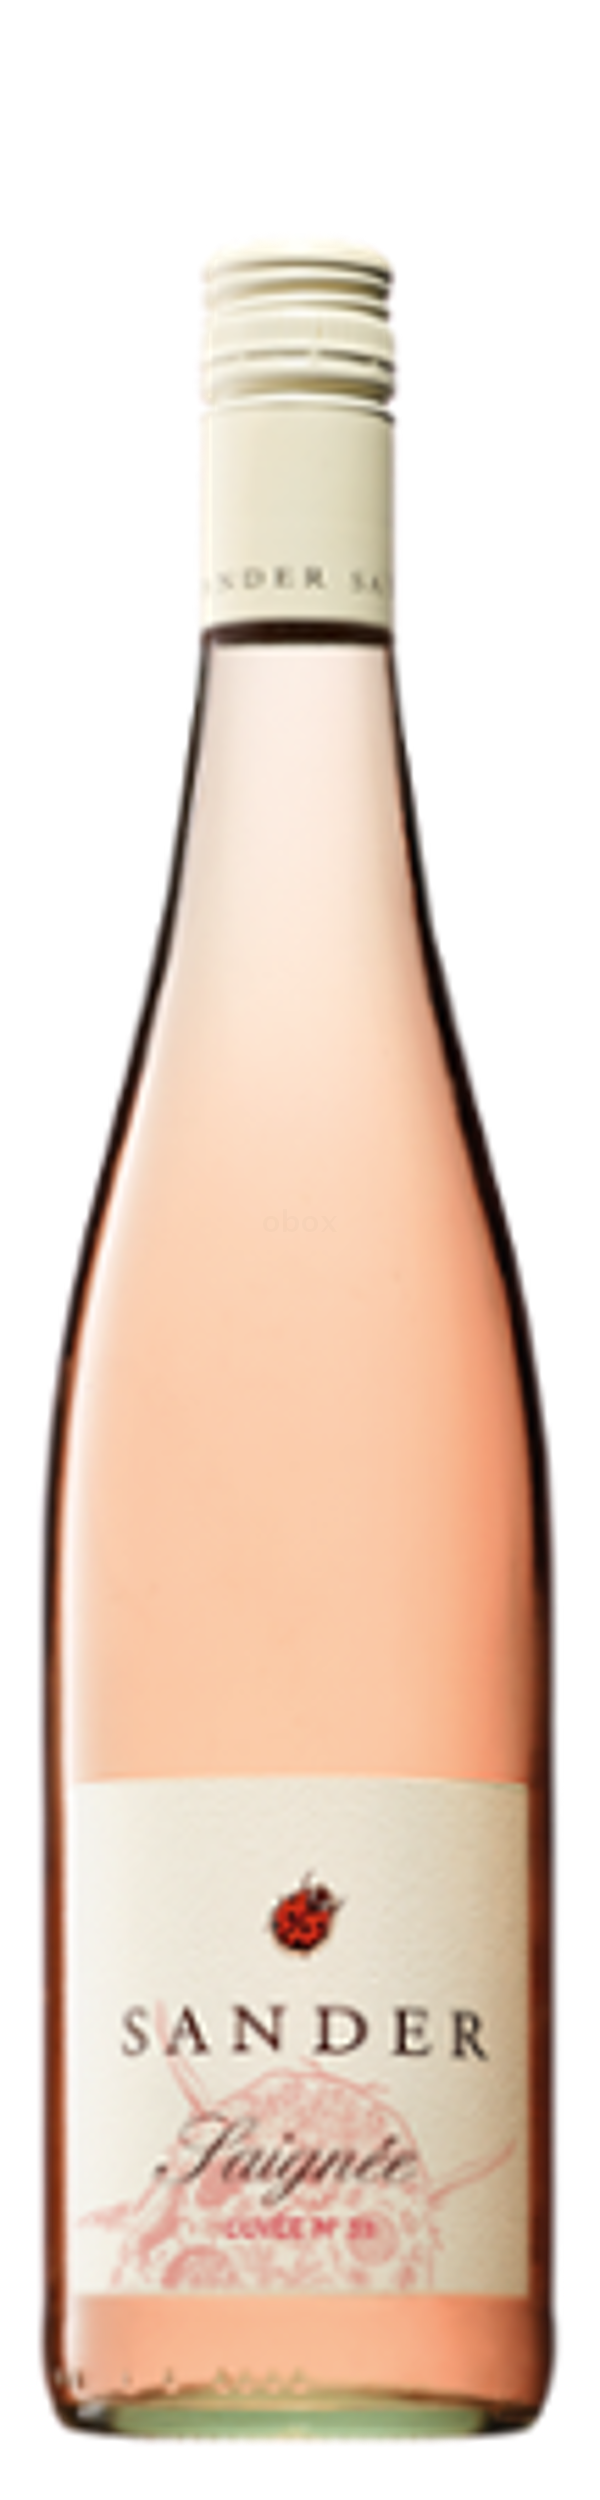 Produktfoto zu Spargelwein Fass39 rosé 0,75l